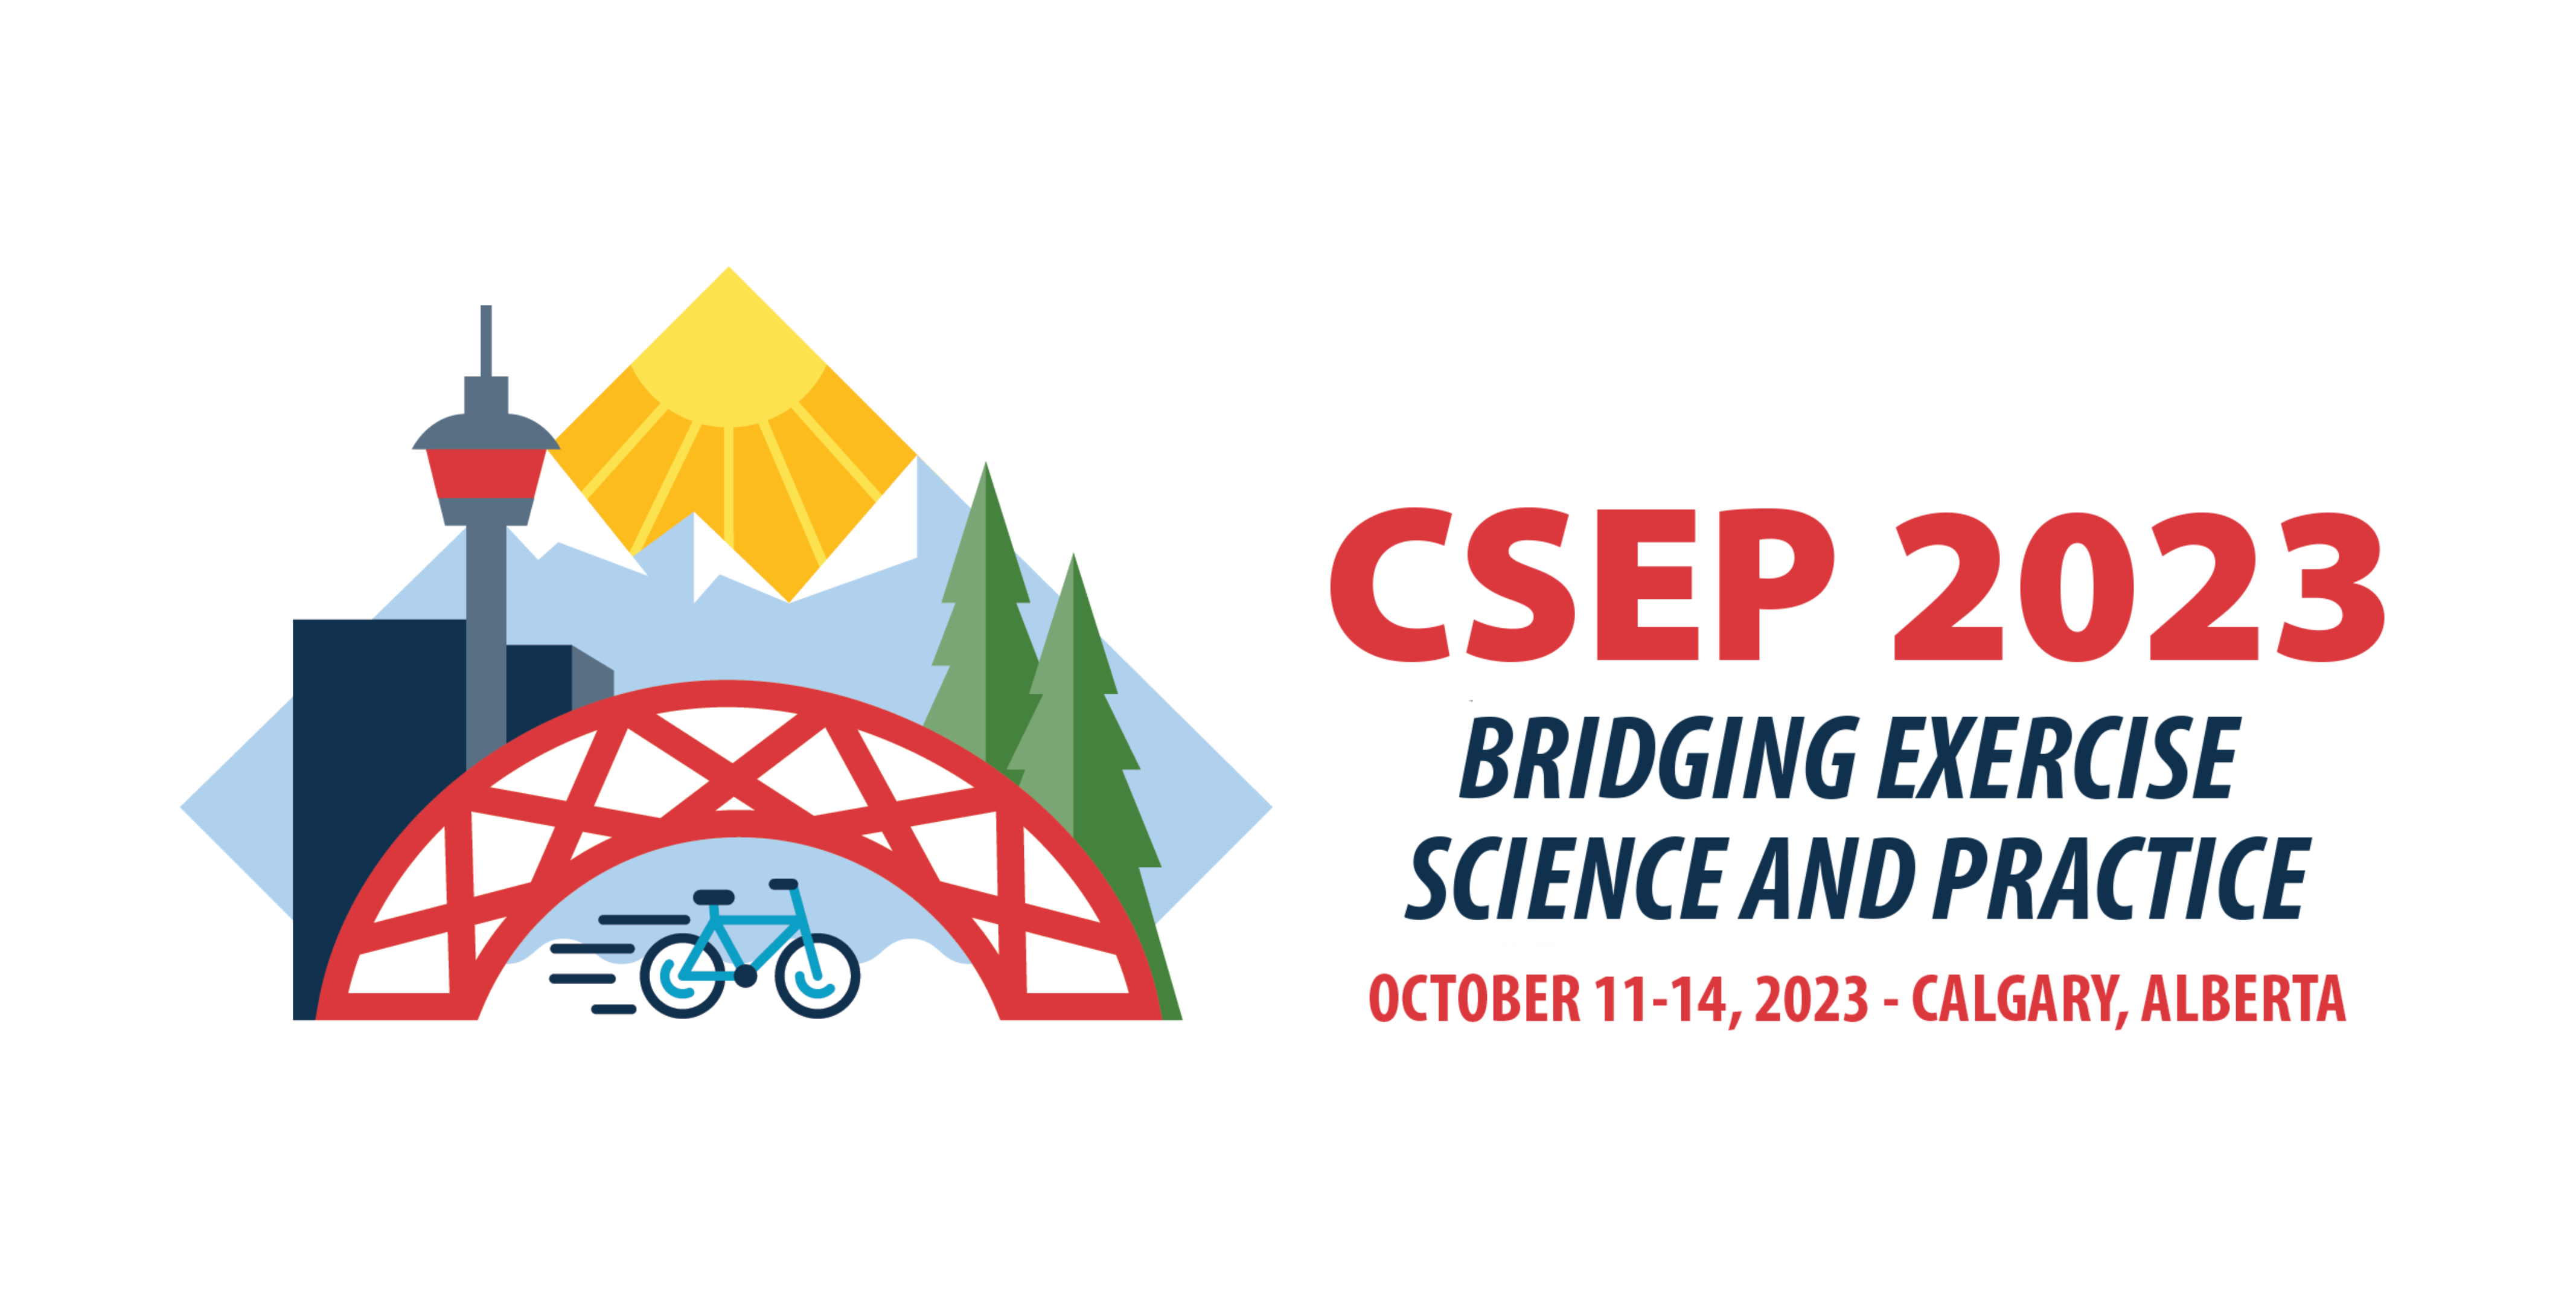 CSEP 2023, Bridging Exercise Science and Practice